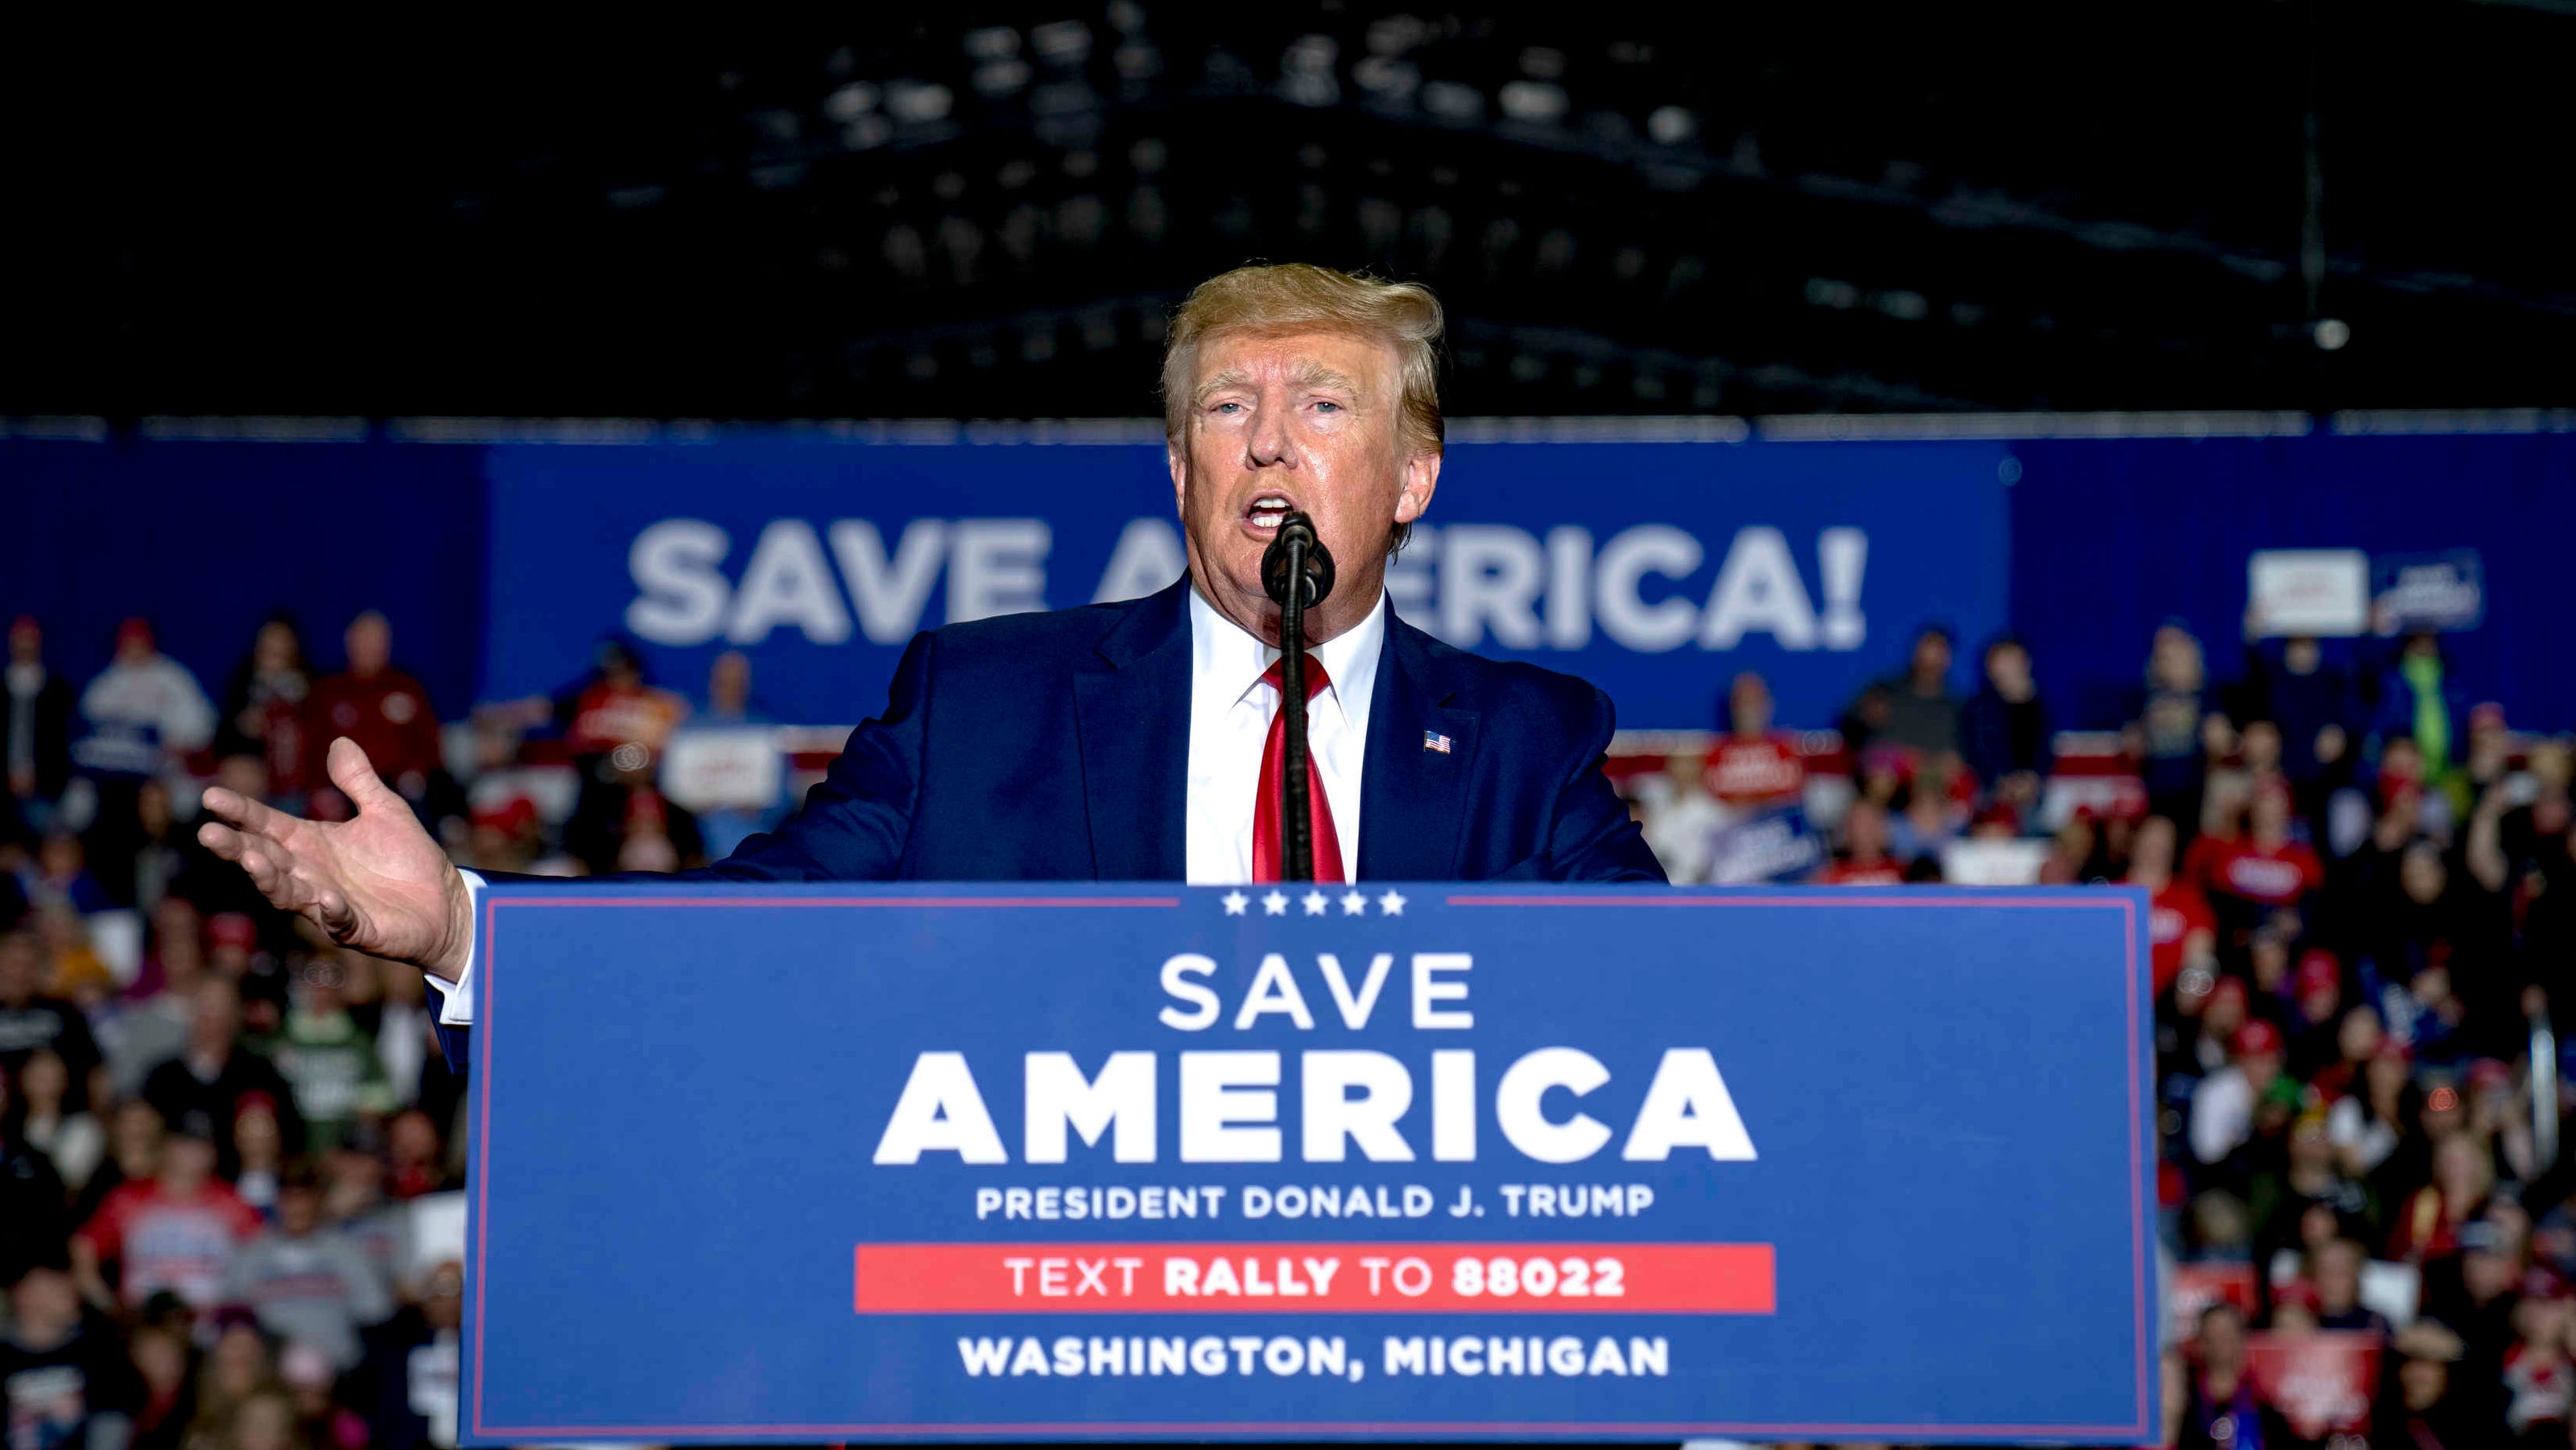 PRESIDENT TRUMP’S FULL SPEECH – SAVE AMERICA RALLY IN MICHIGAN